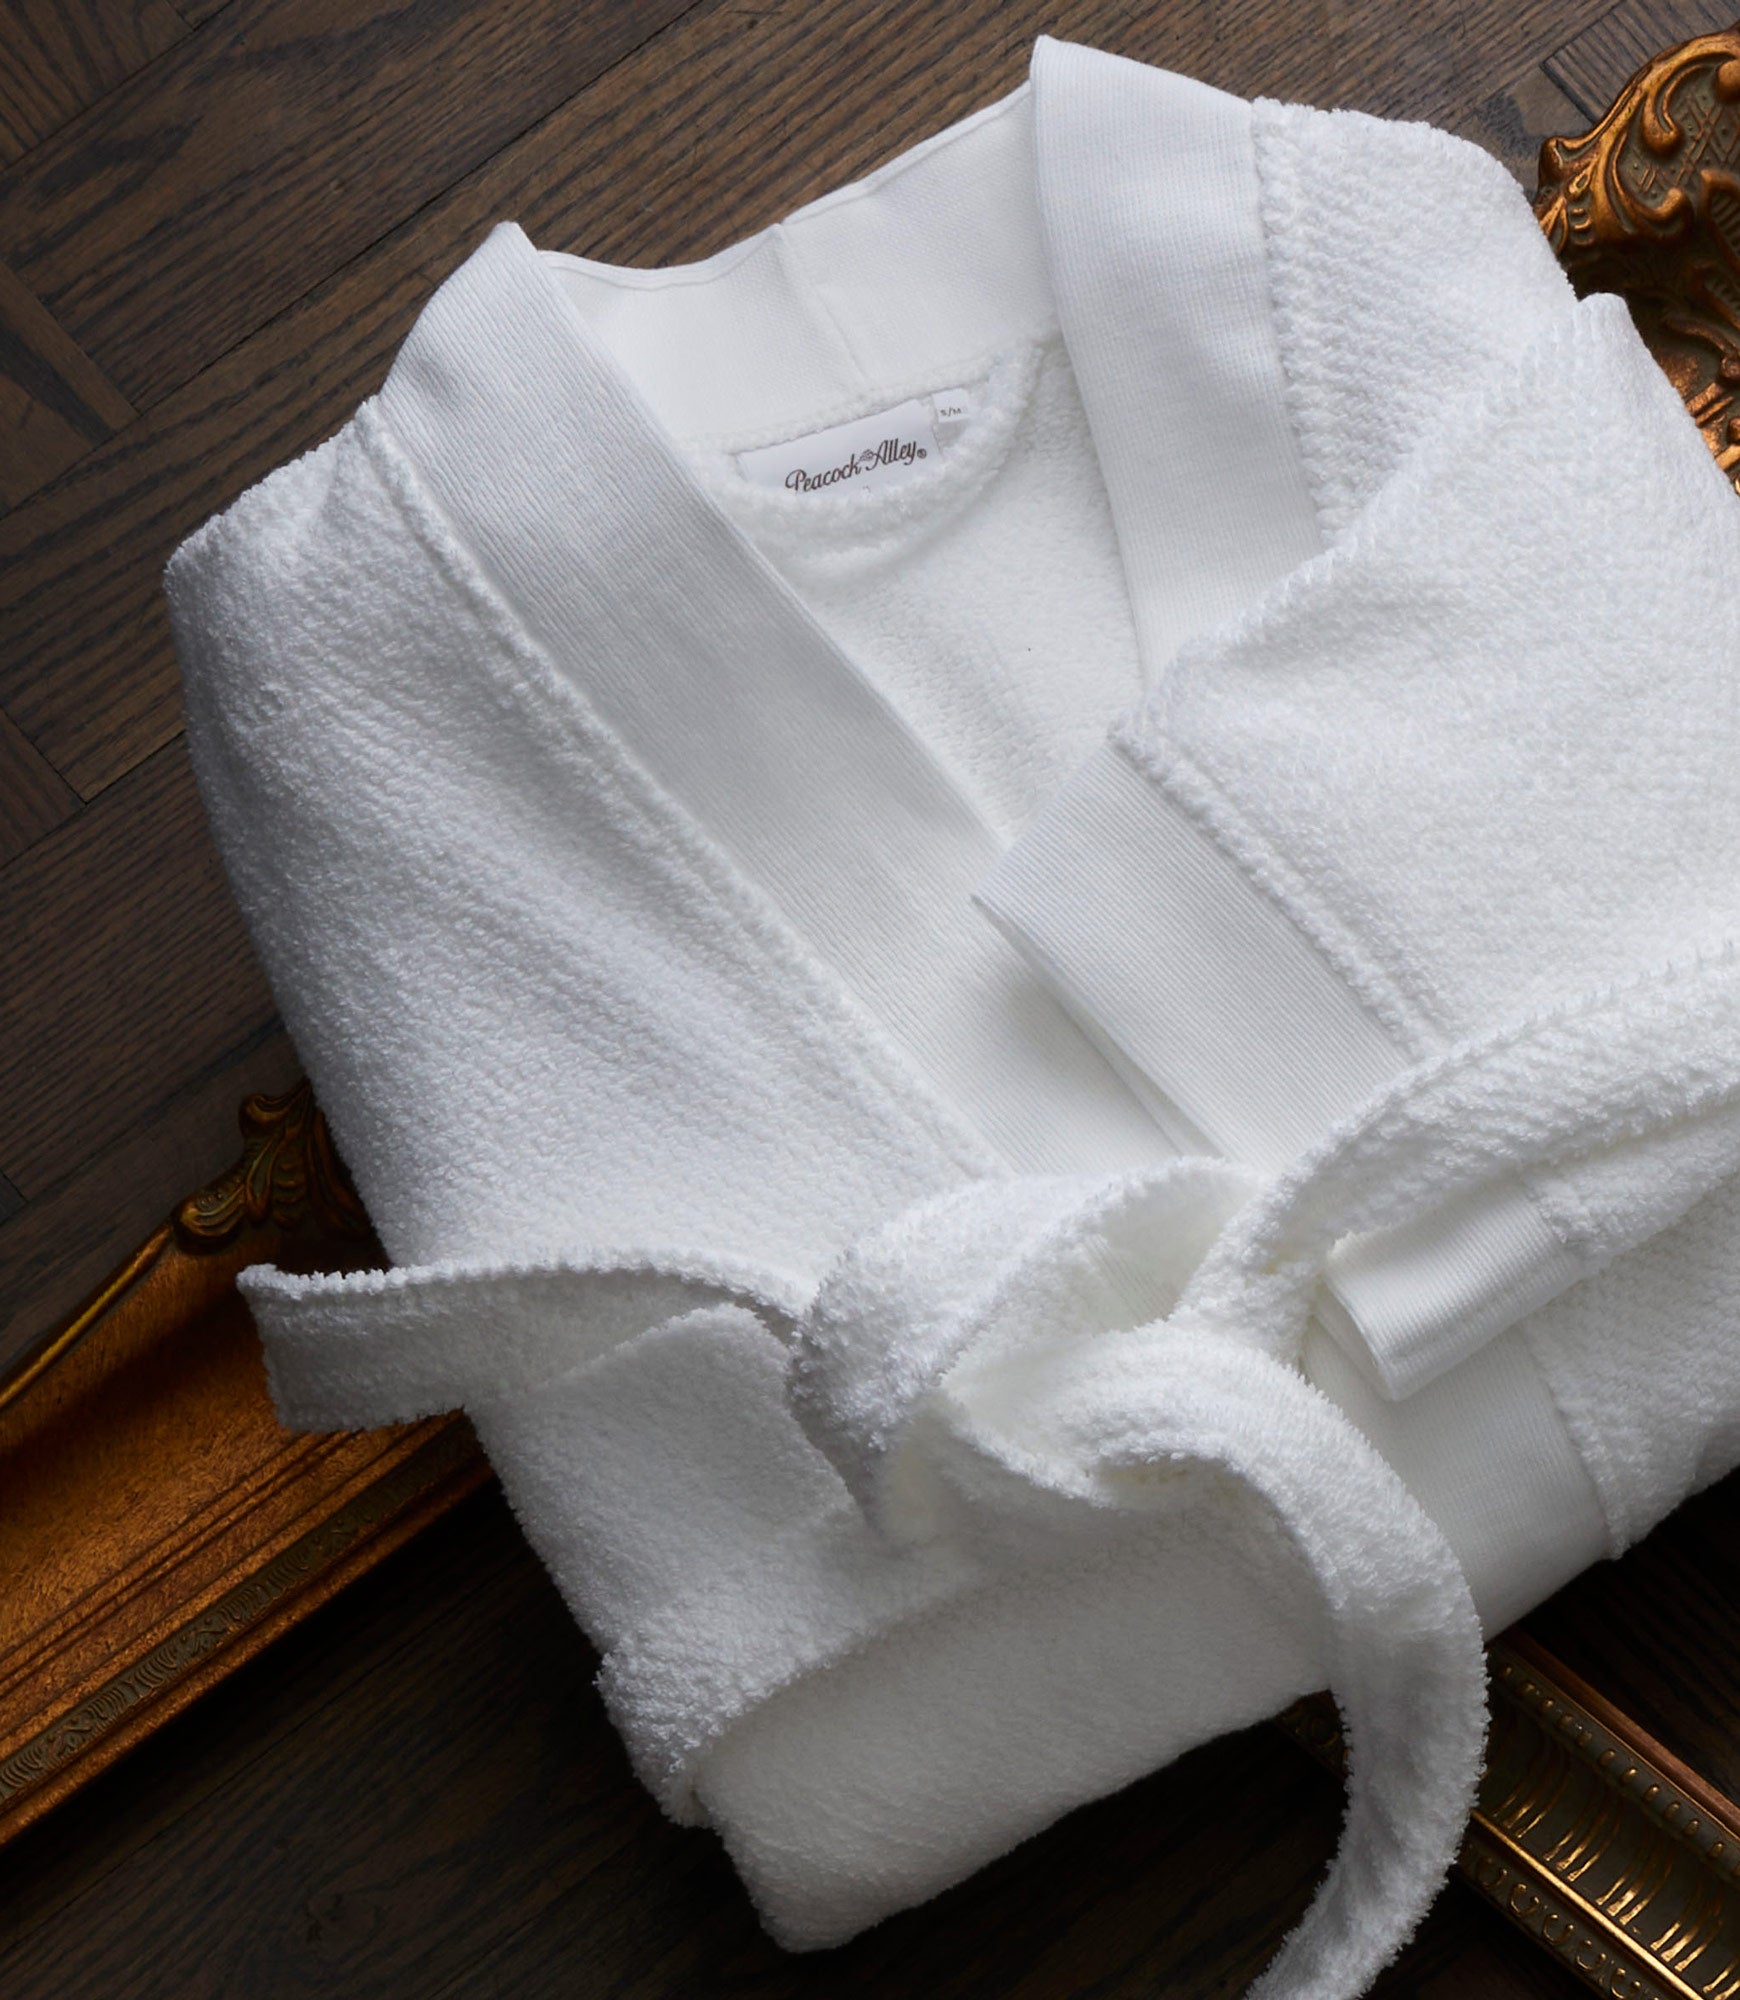 Bathrobes & Luxury Bath Towels on Sale